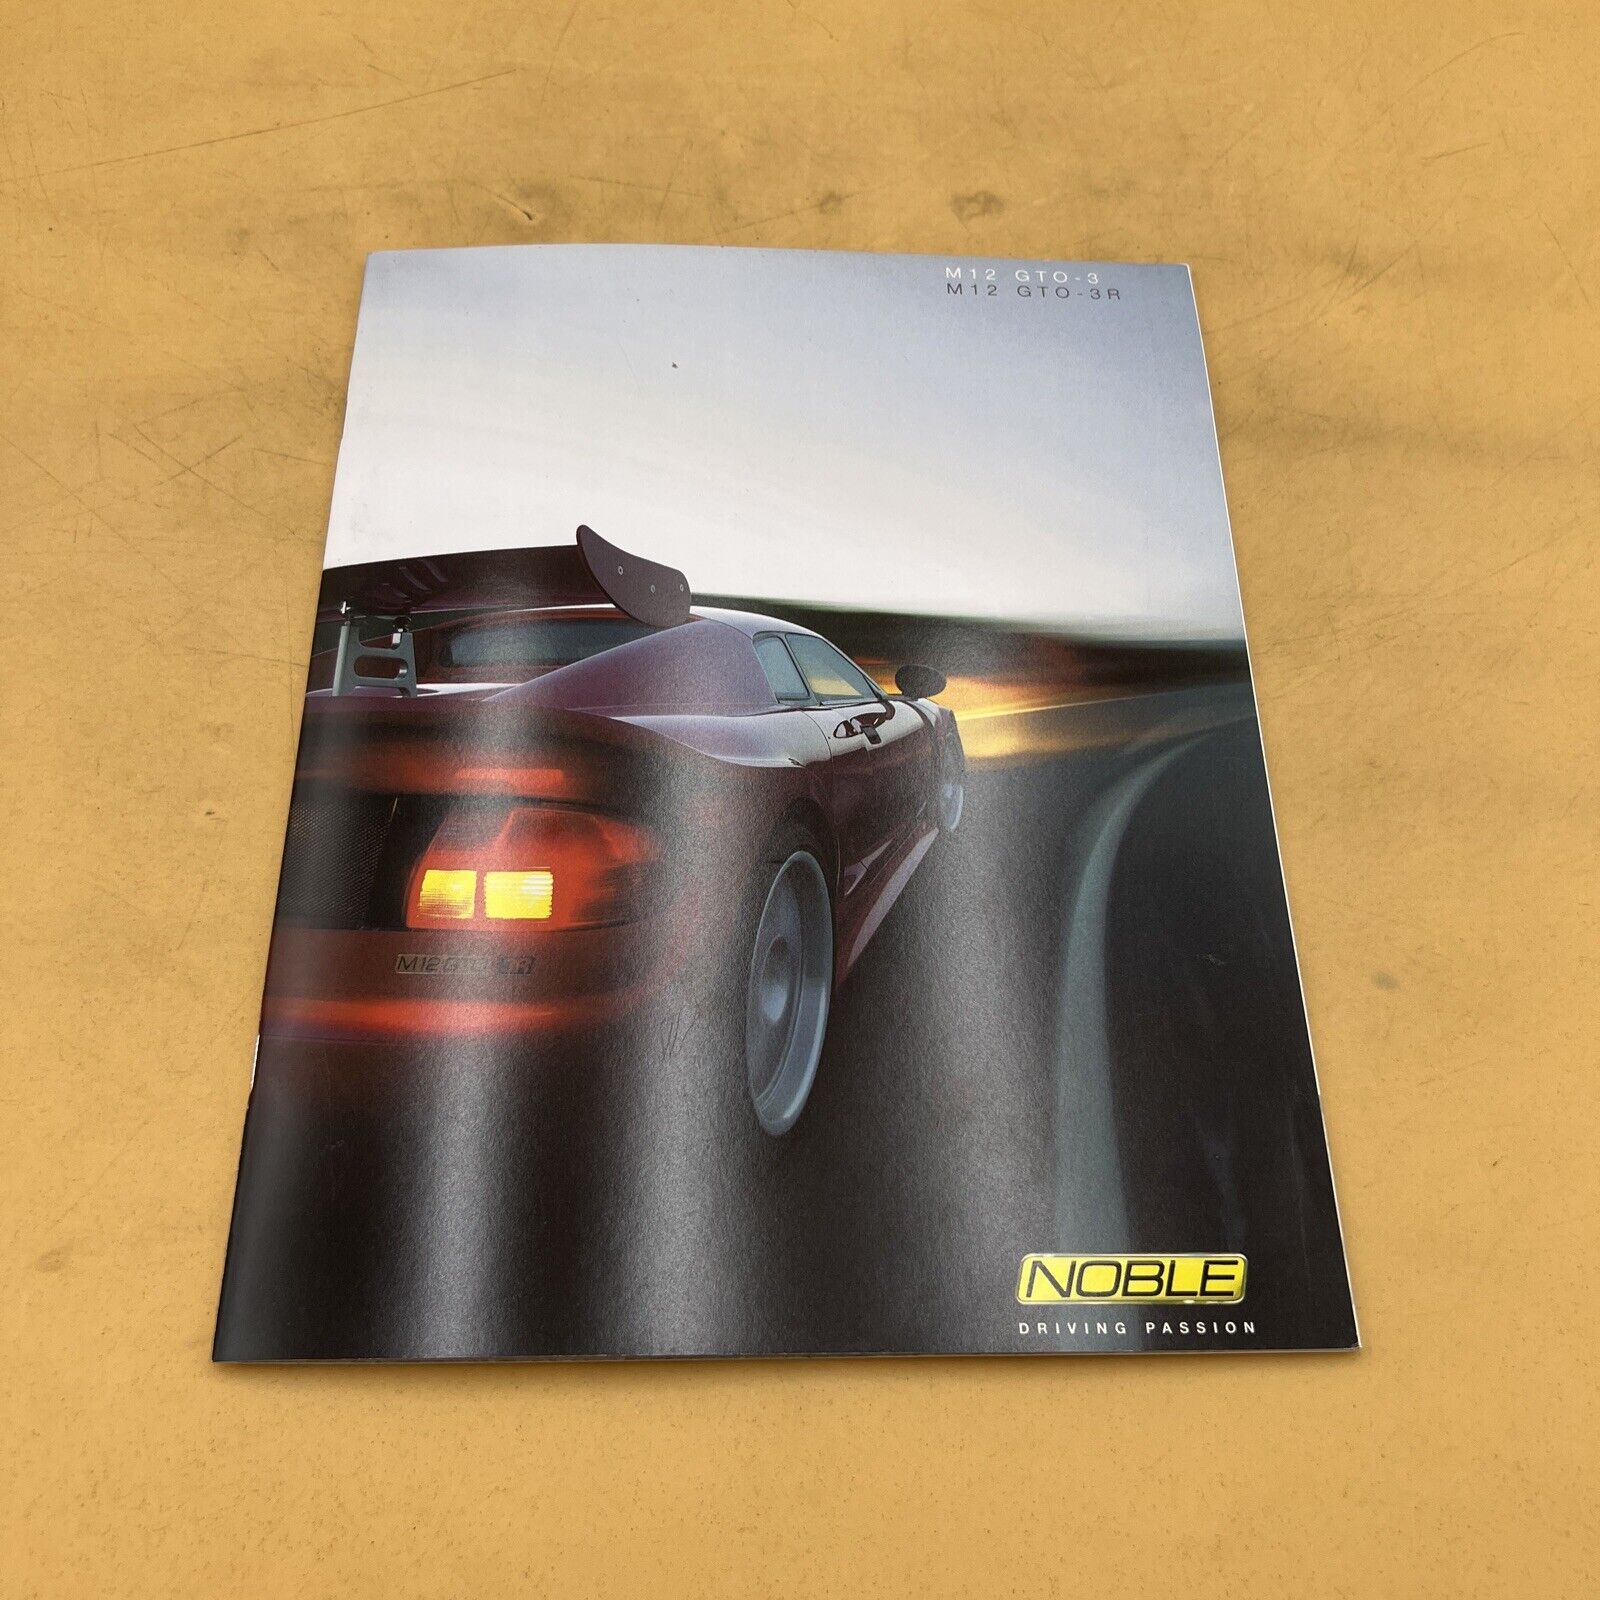 Noble M12 GTO-3 M12 GTO-3R Sales Advertising Brochure Catalog Dealership